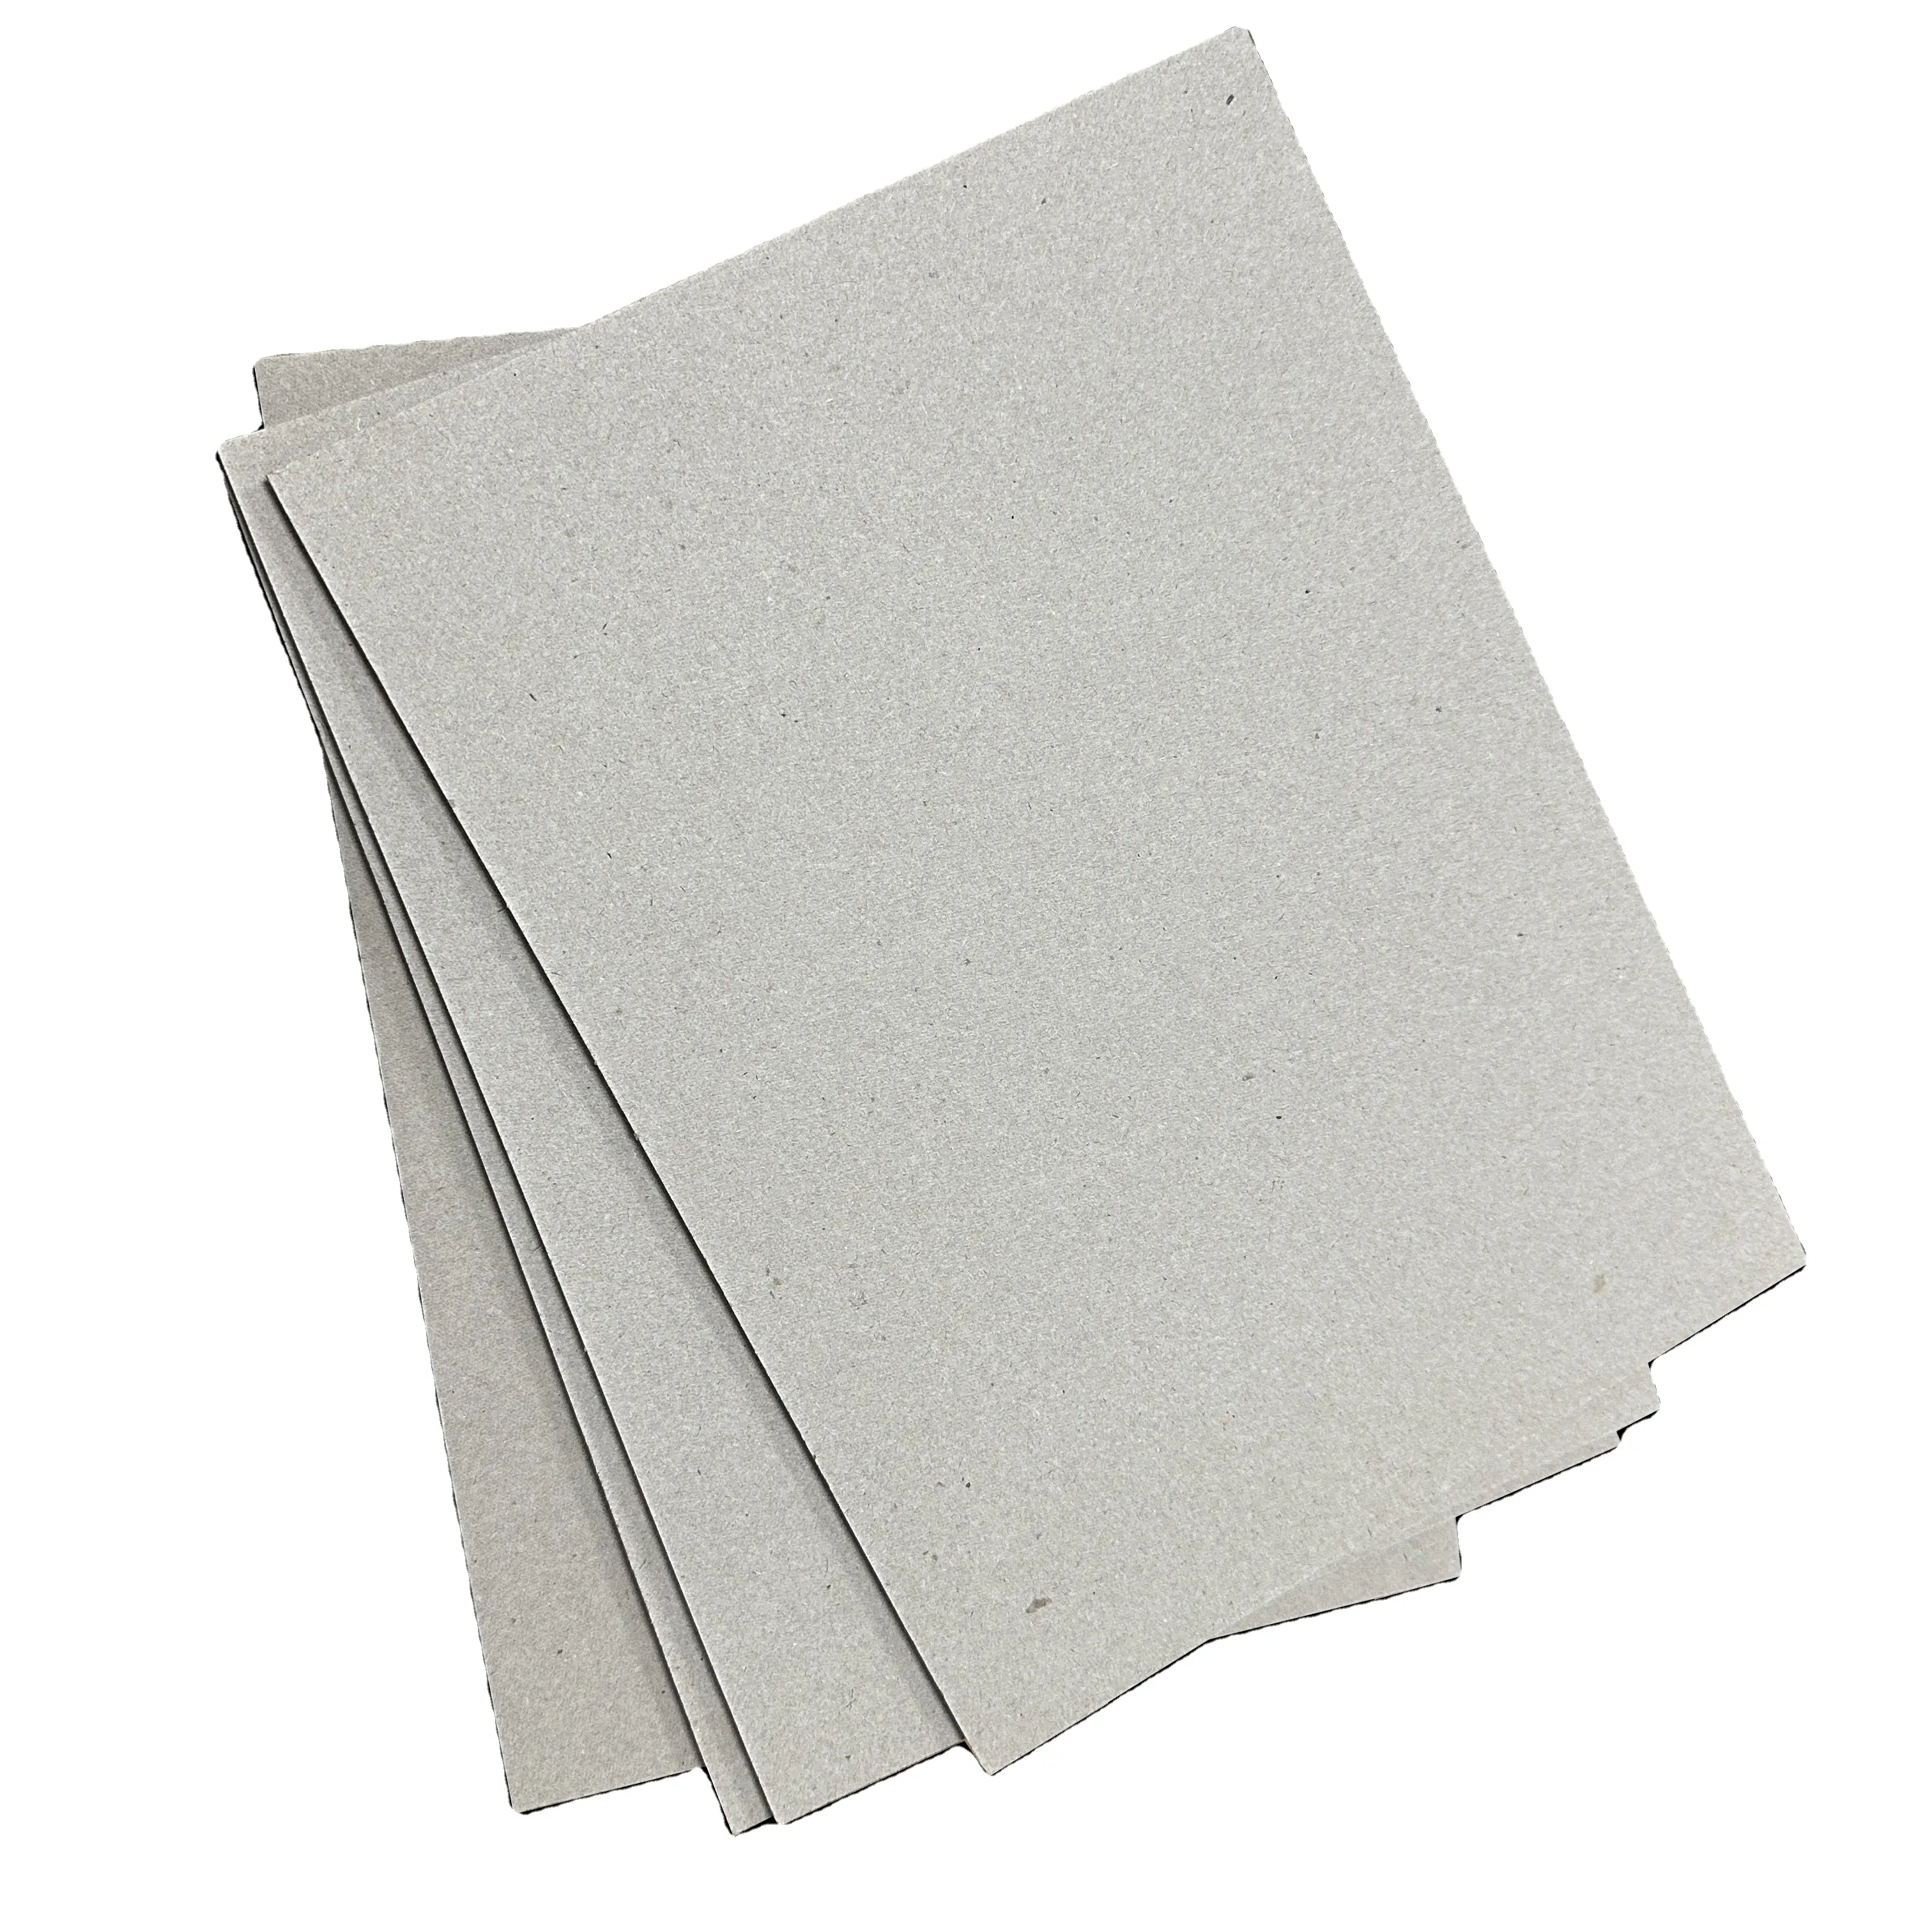 Notebook Cover grau Recycling Pappe Stroh brett 0,4mm-4,0mm Größe anpassen